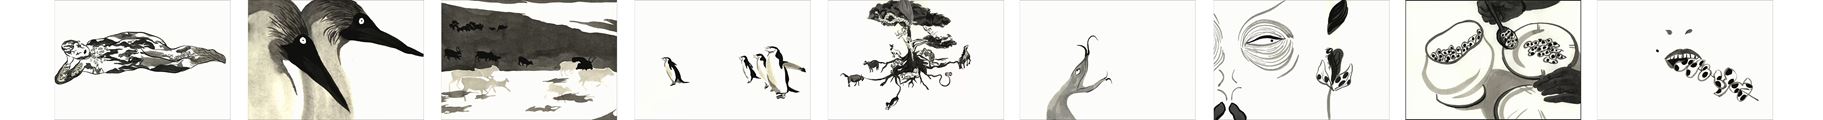 Origin of Species_Ink Book 3 by Liu Yi contemporary artwork 1